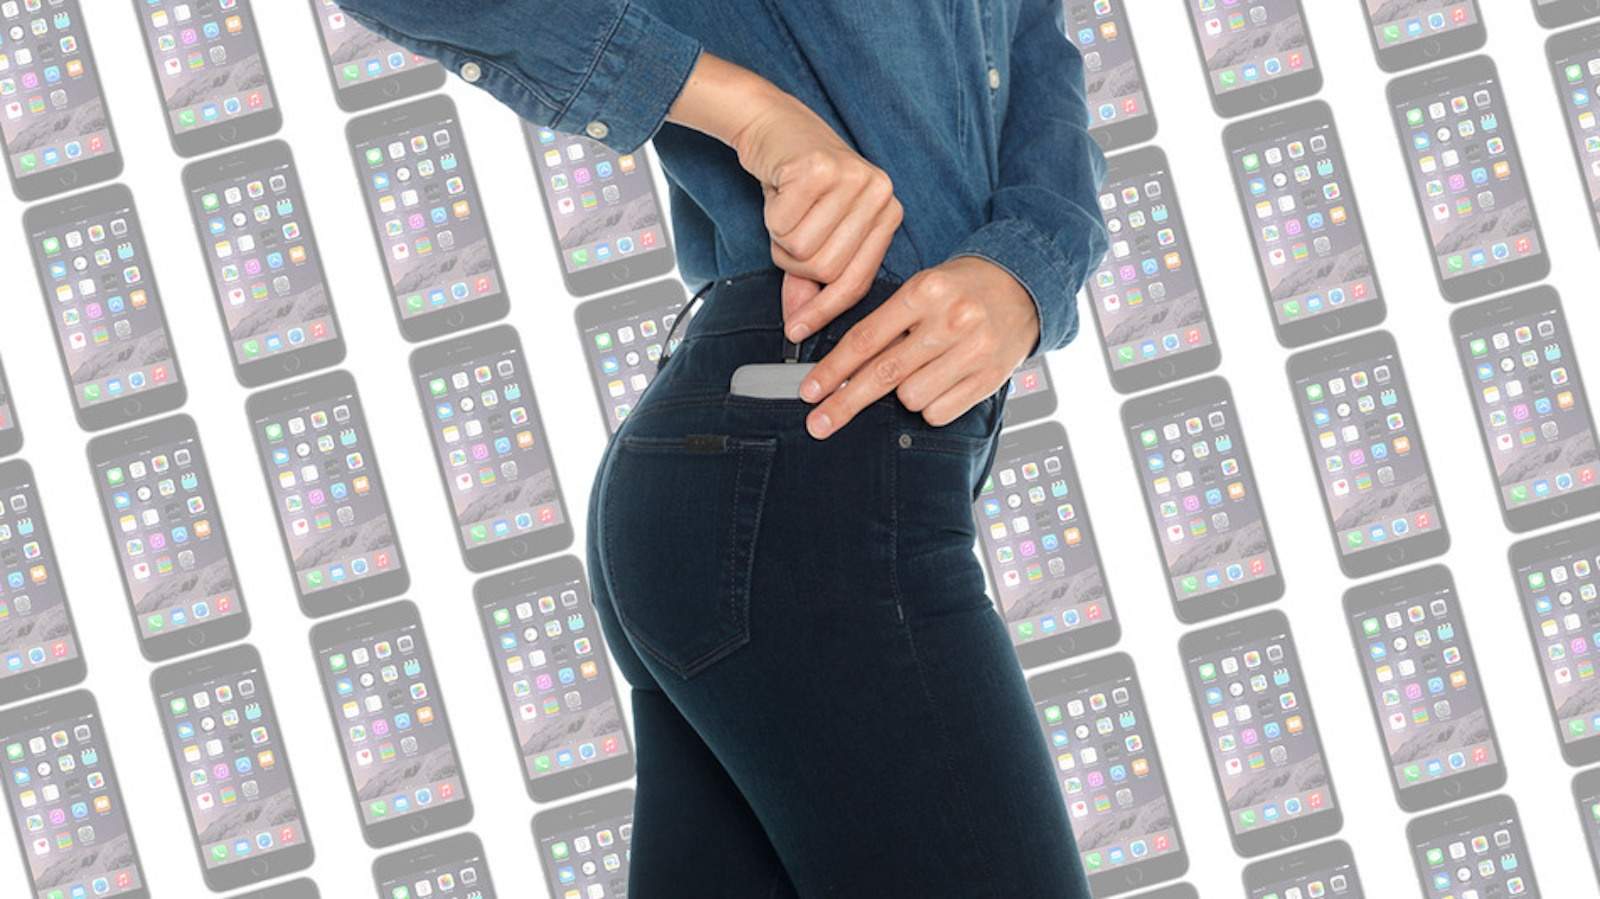 Joe's #Hello jeans boast a discreet iPhone charger.